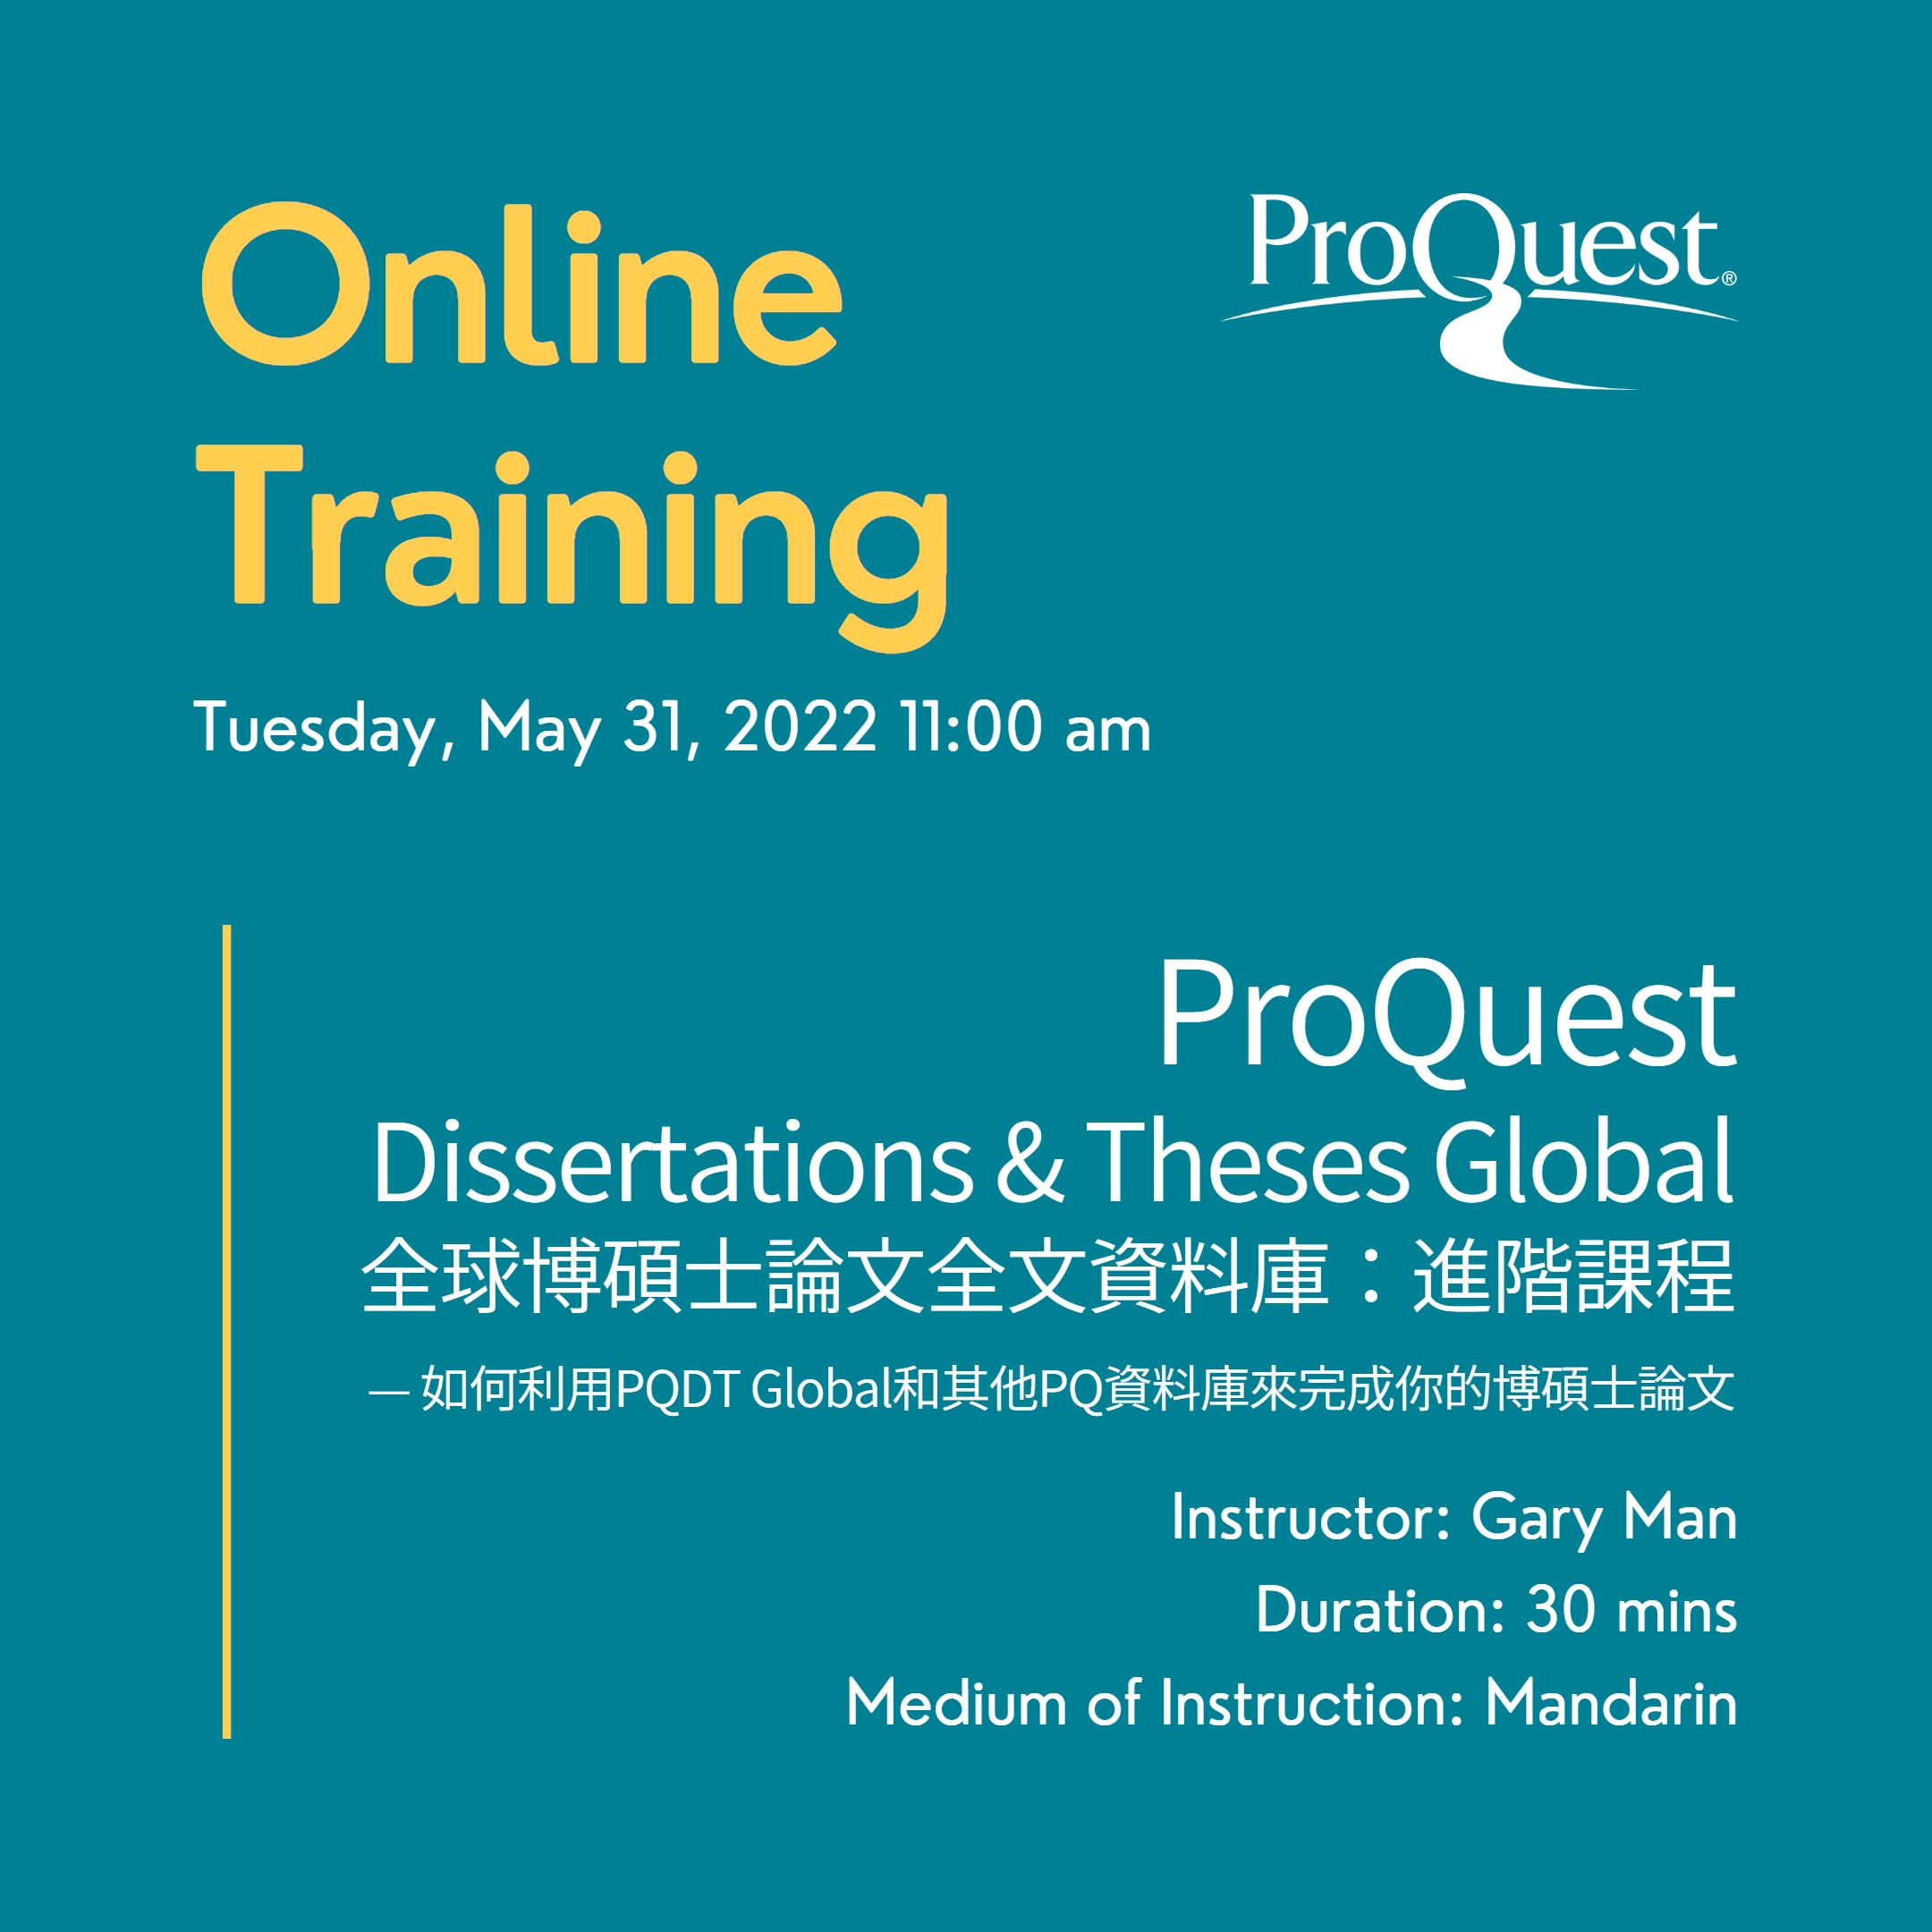 PROQUEST ONLINE TRAINING: ProQuest Dissertations & Theses Global 全球博碩士論文全文資料庫：進階課程 — 如何利用PQDT Global和其他PQ資料庫來完成你的博碩士論文